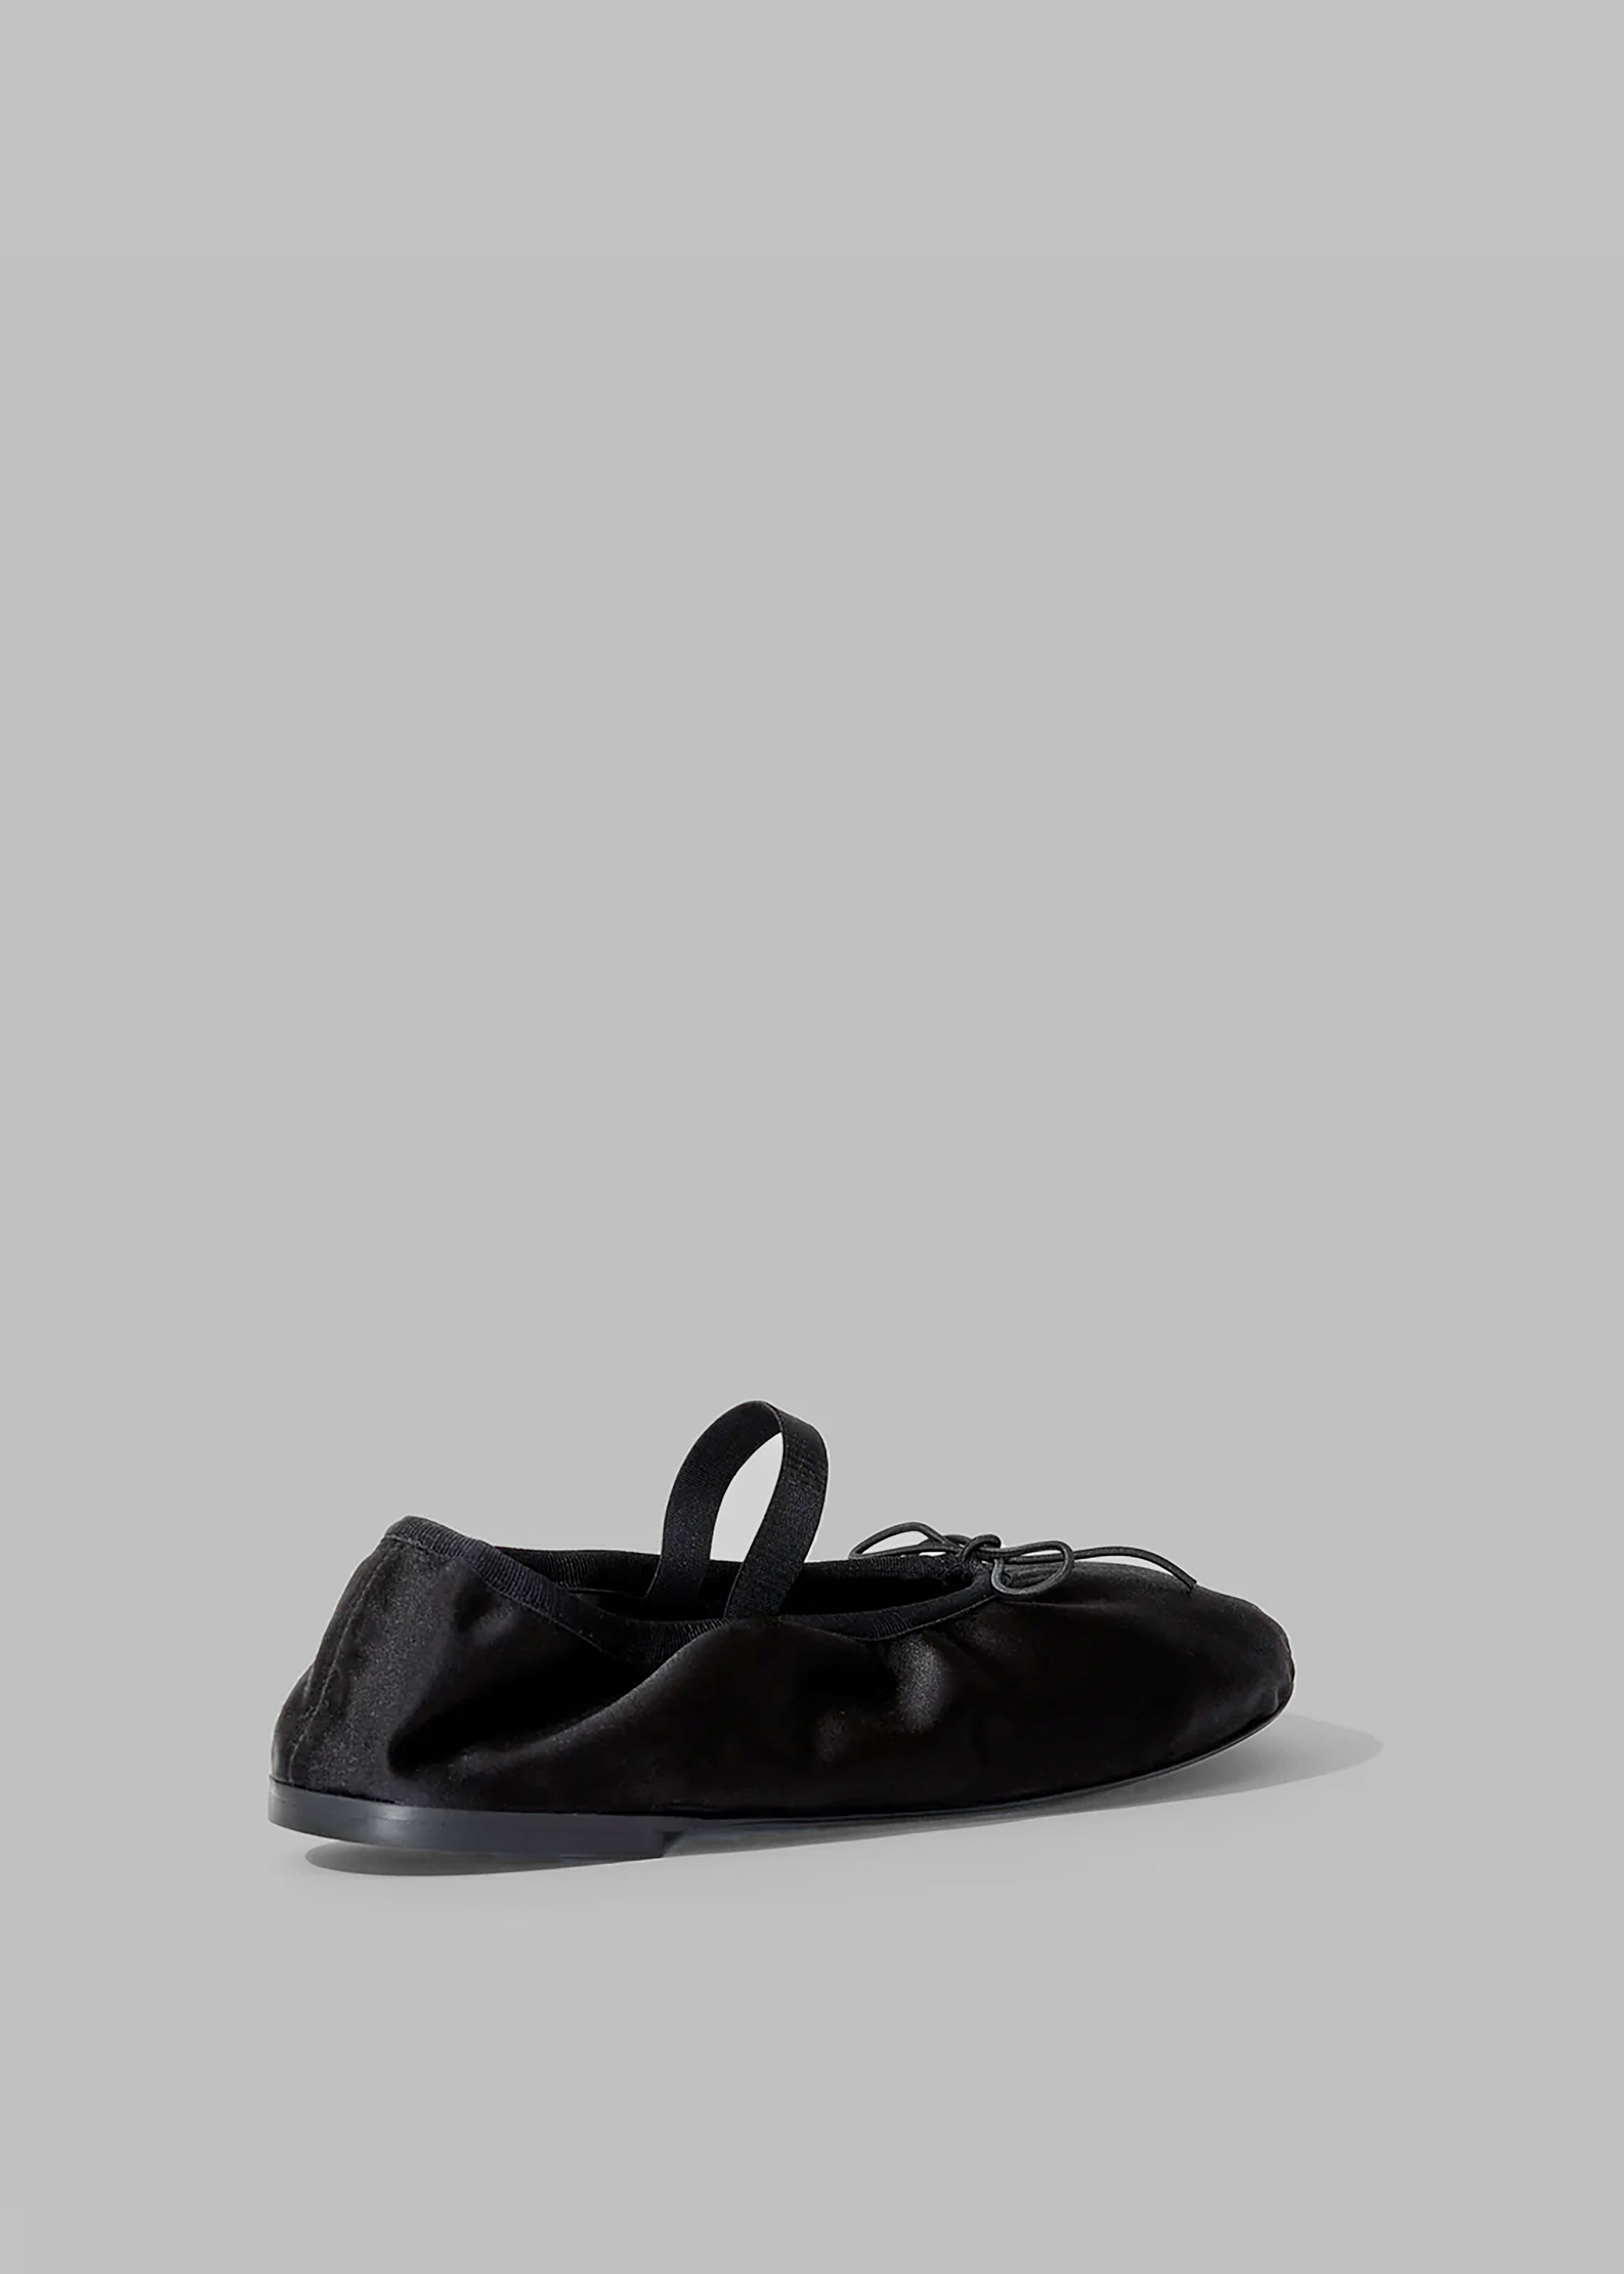 Proenza Schouler Glove Ballet Flats - Black - 6